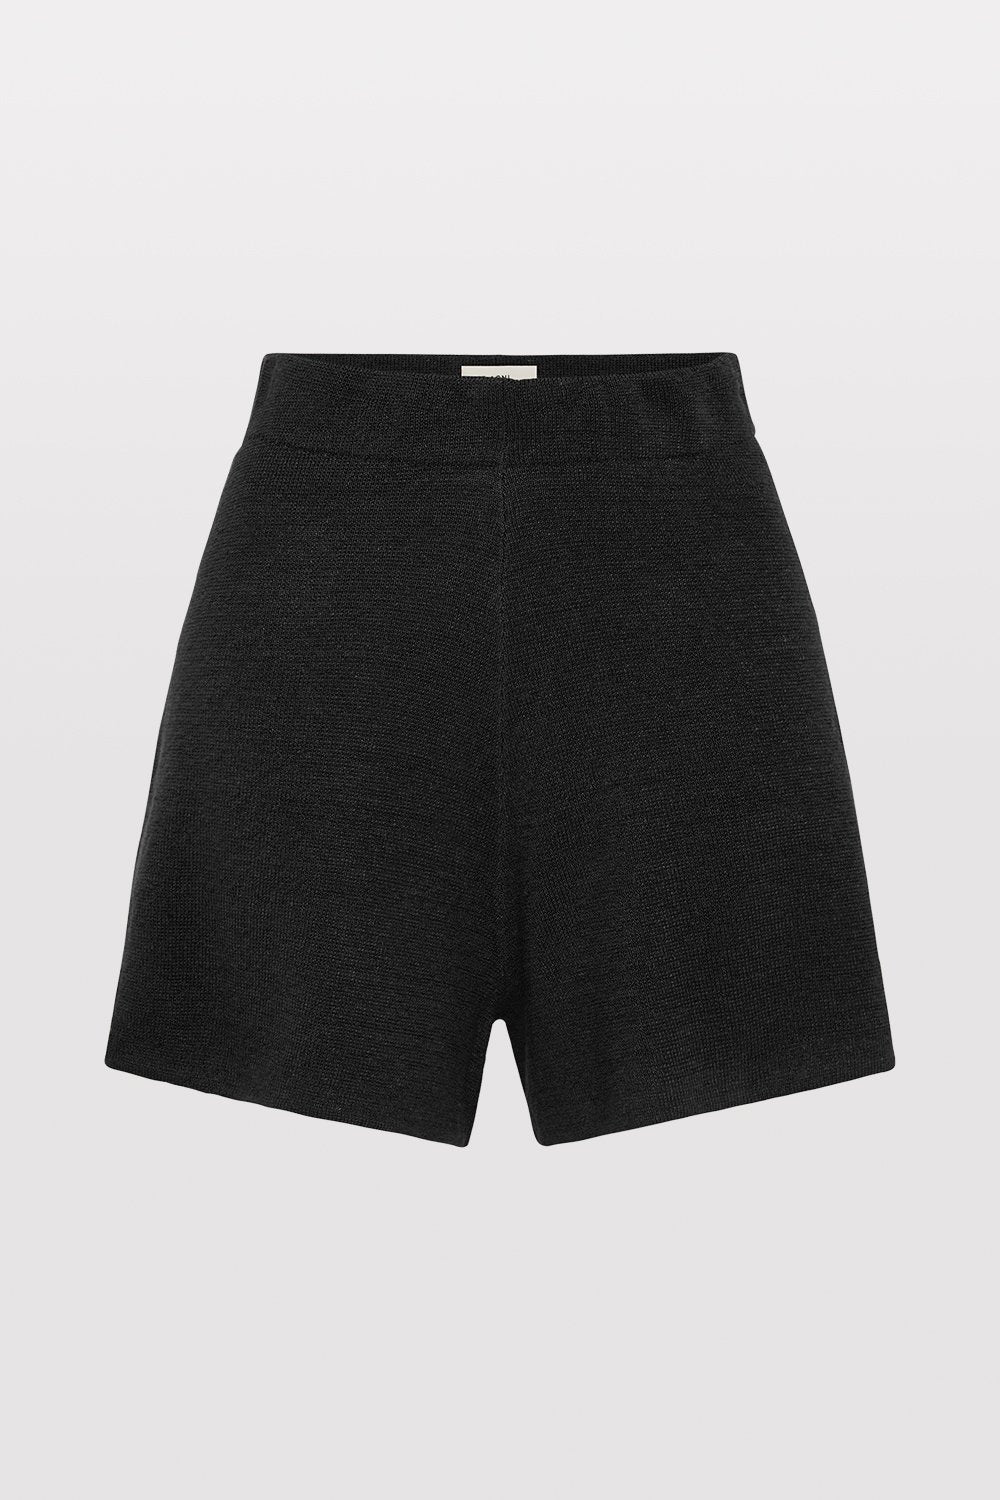 Spencer Shorts - Black – St. Agni